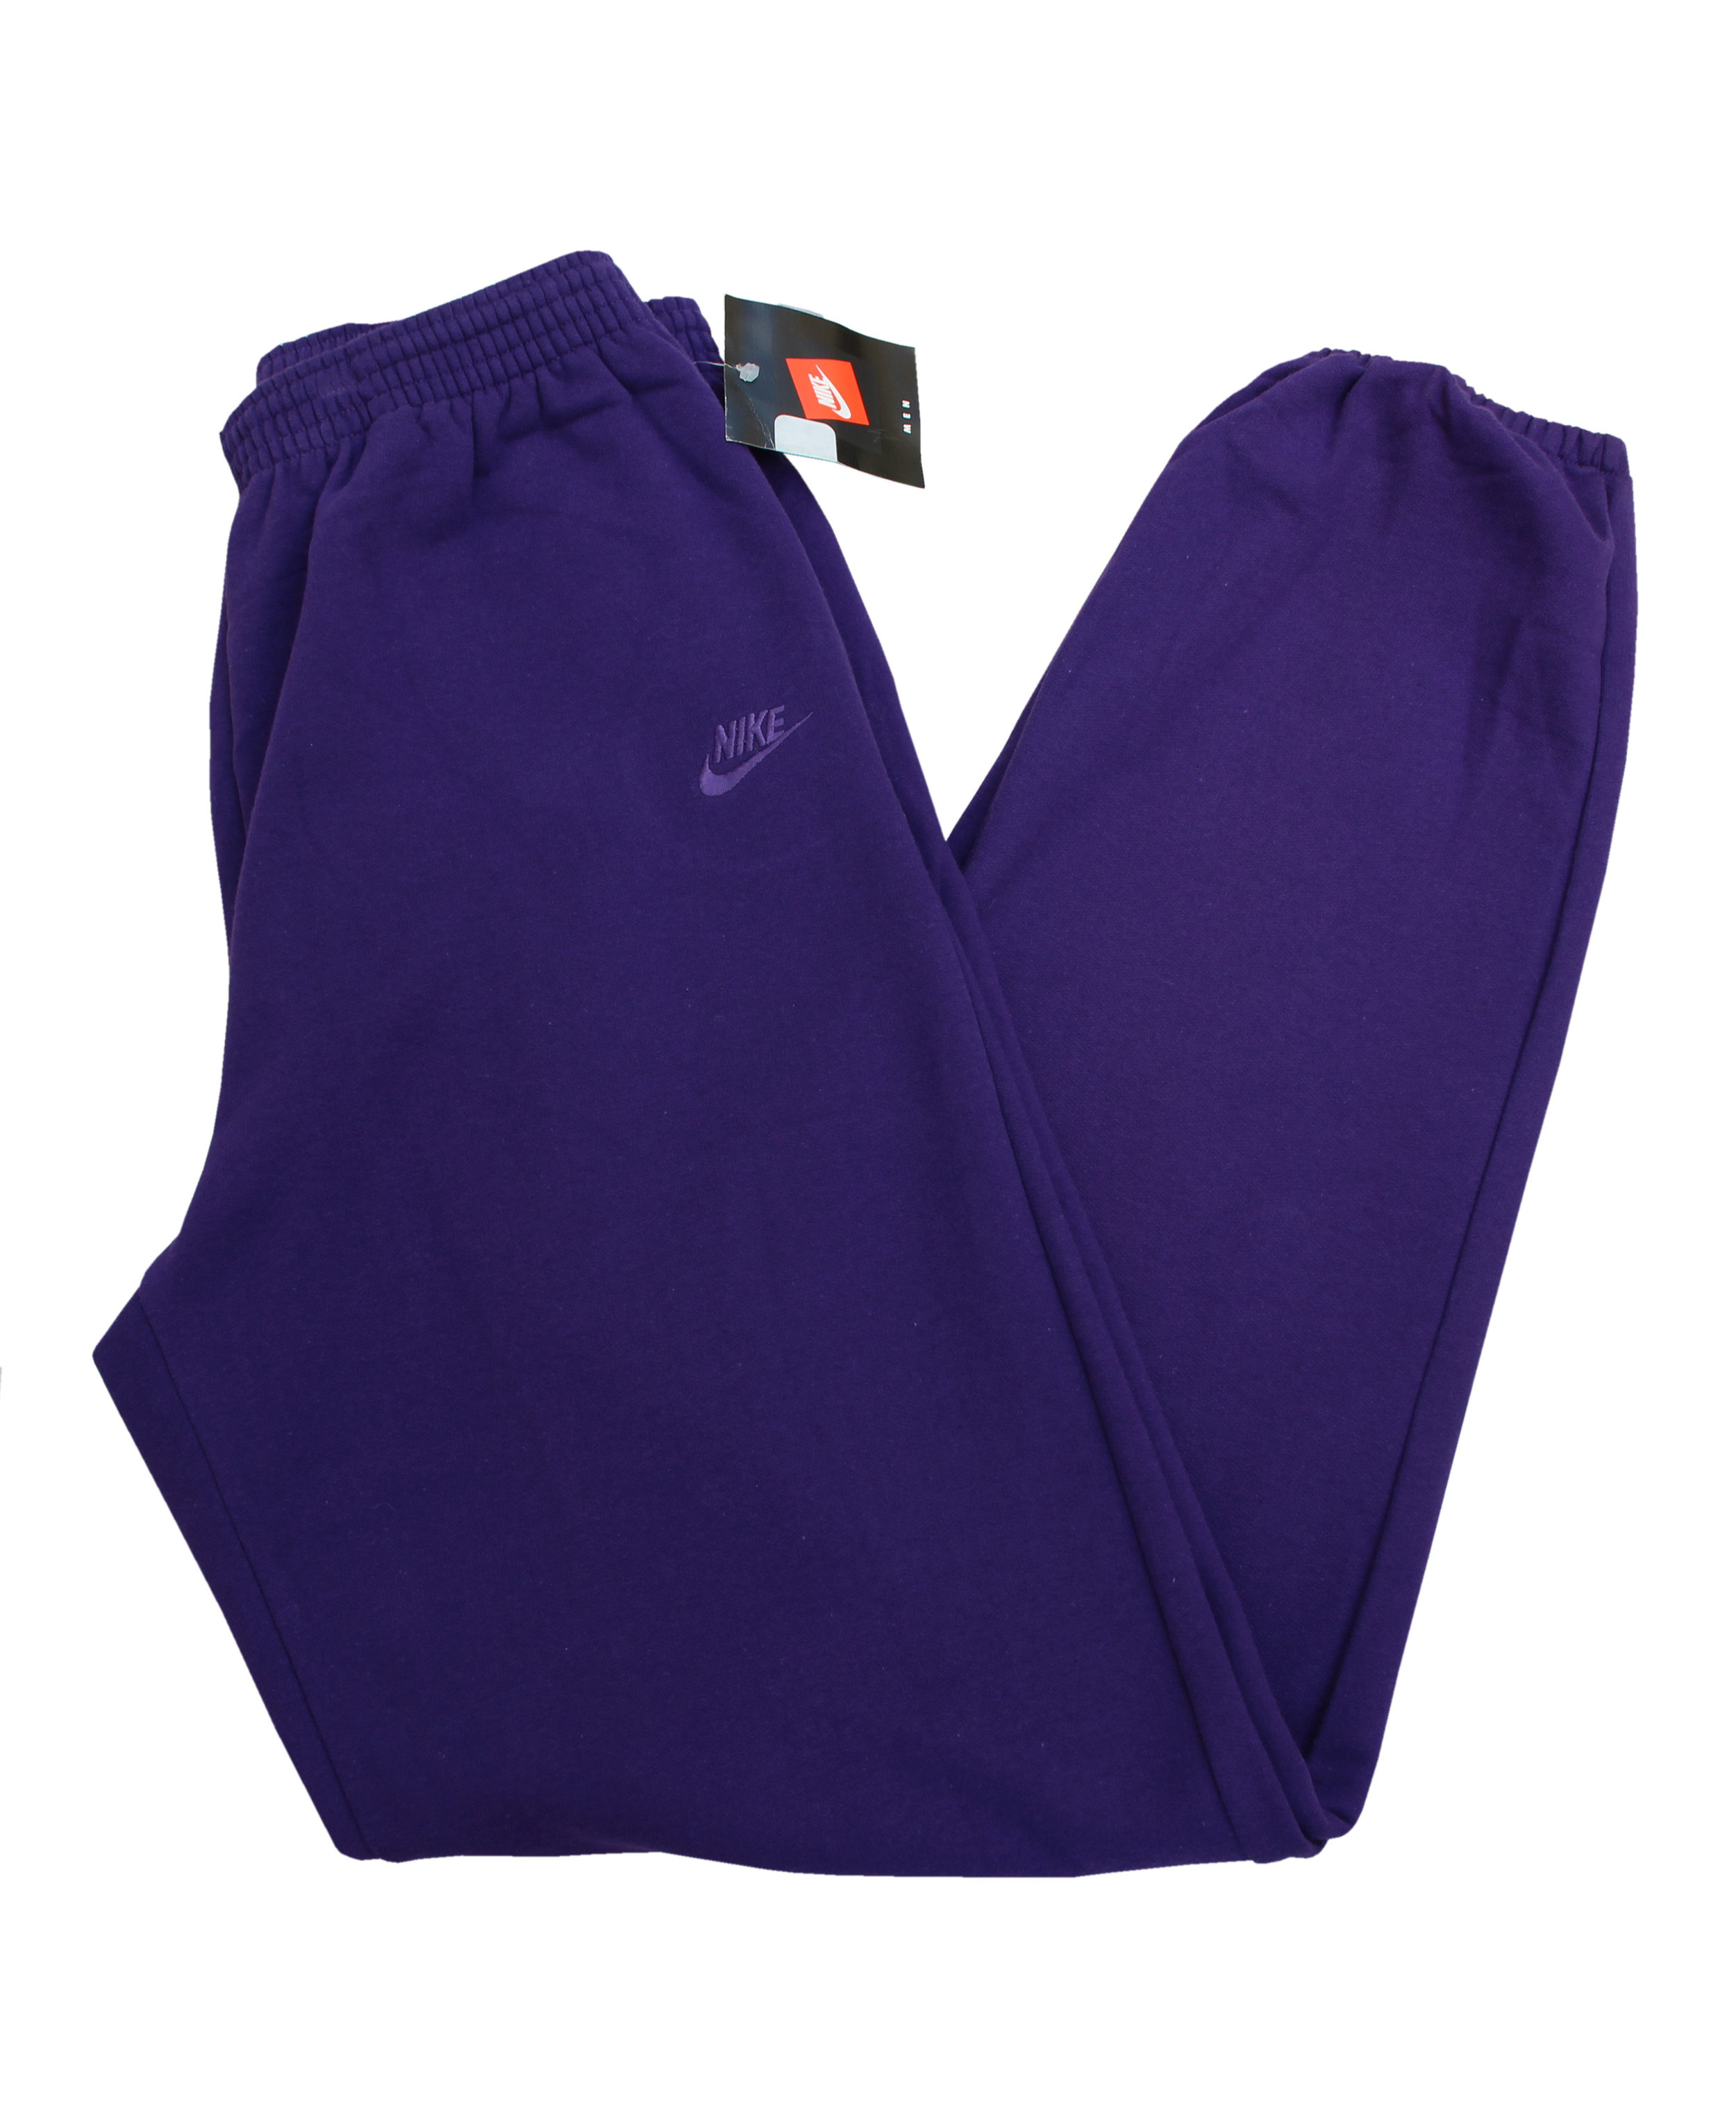 purple nike sweatpants